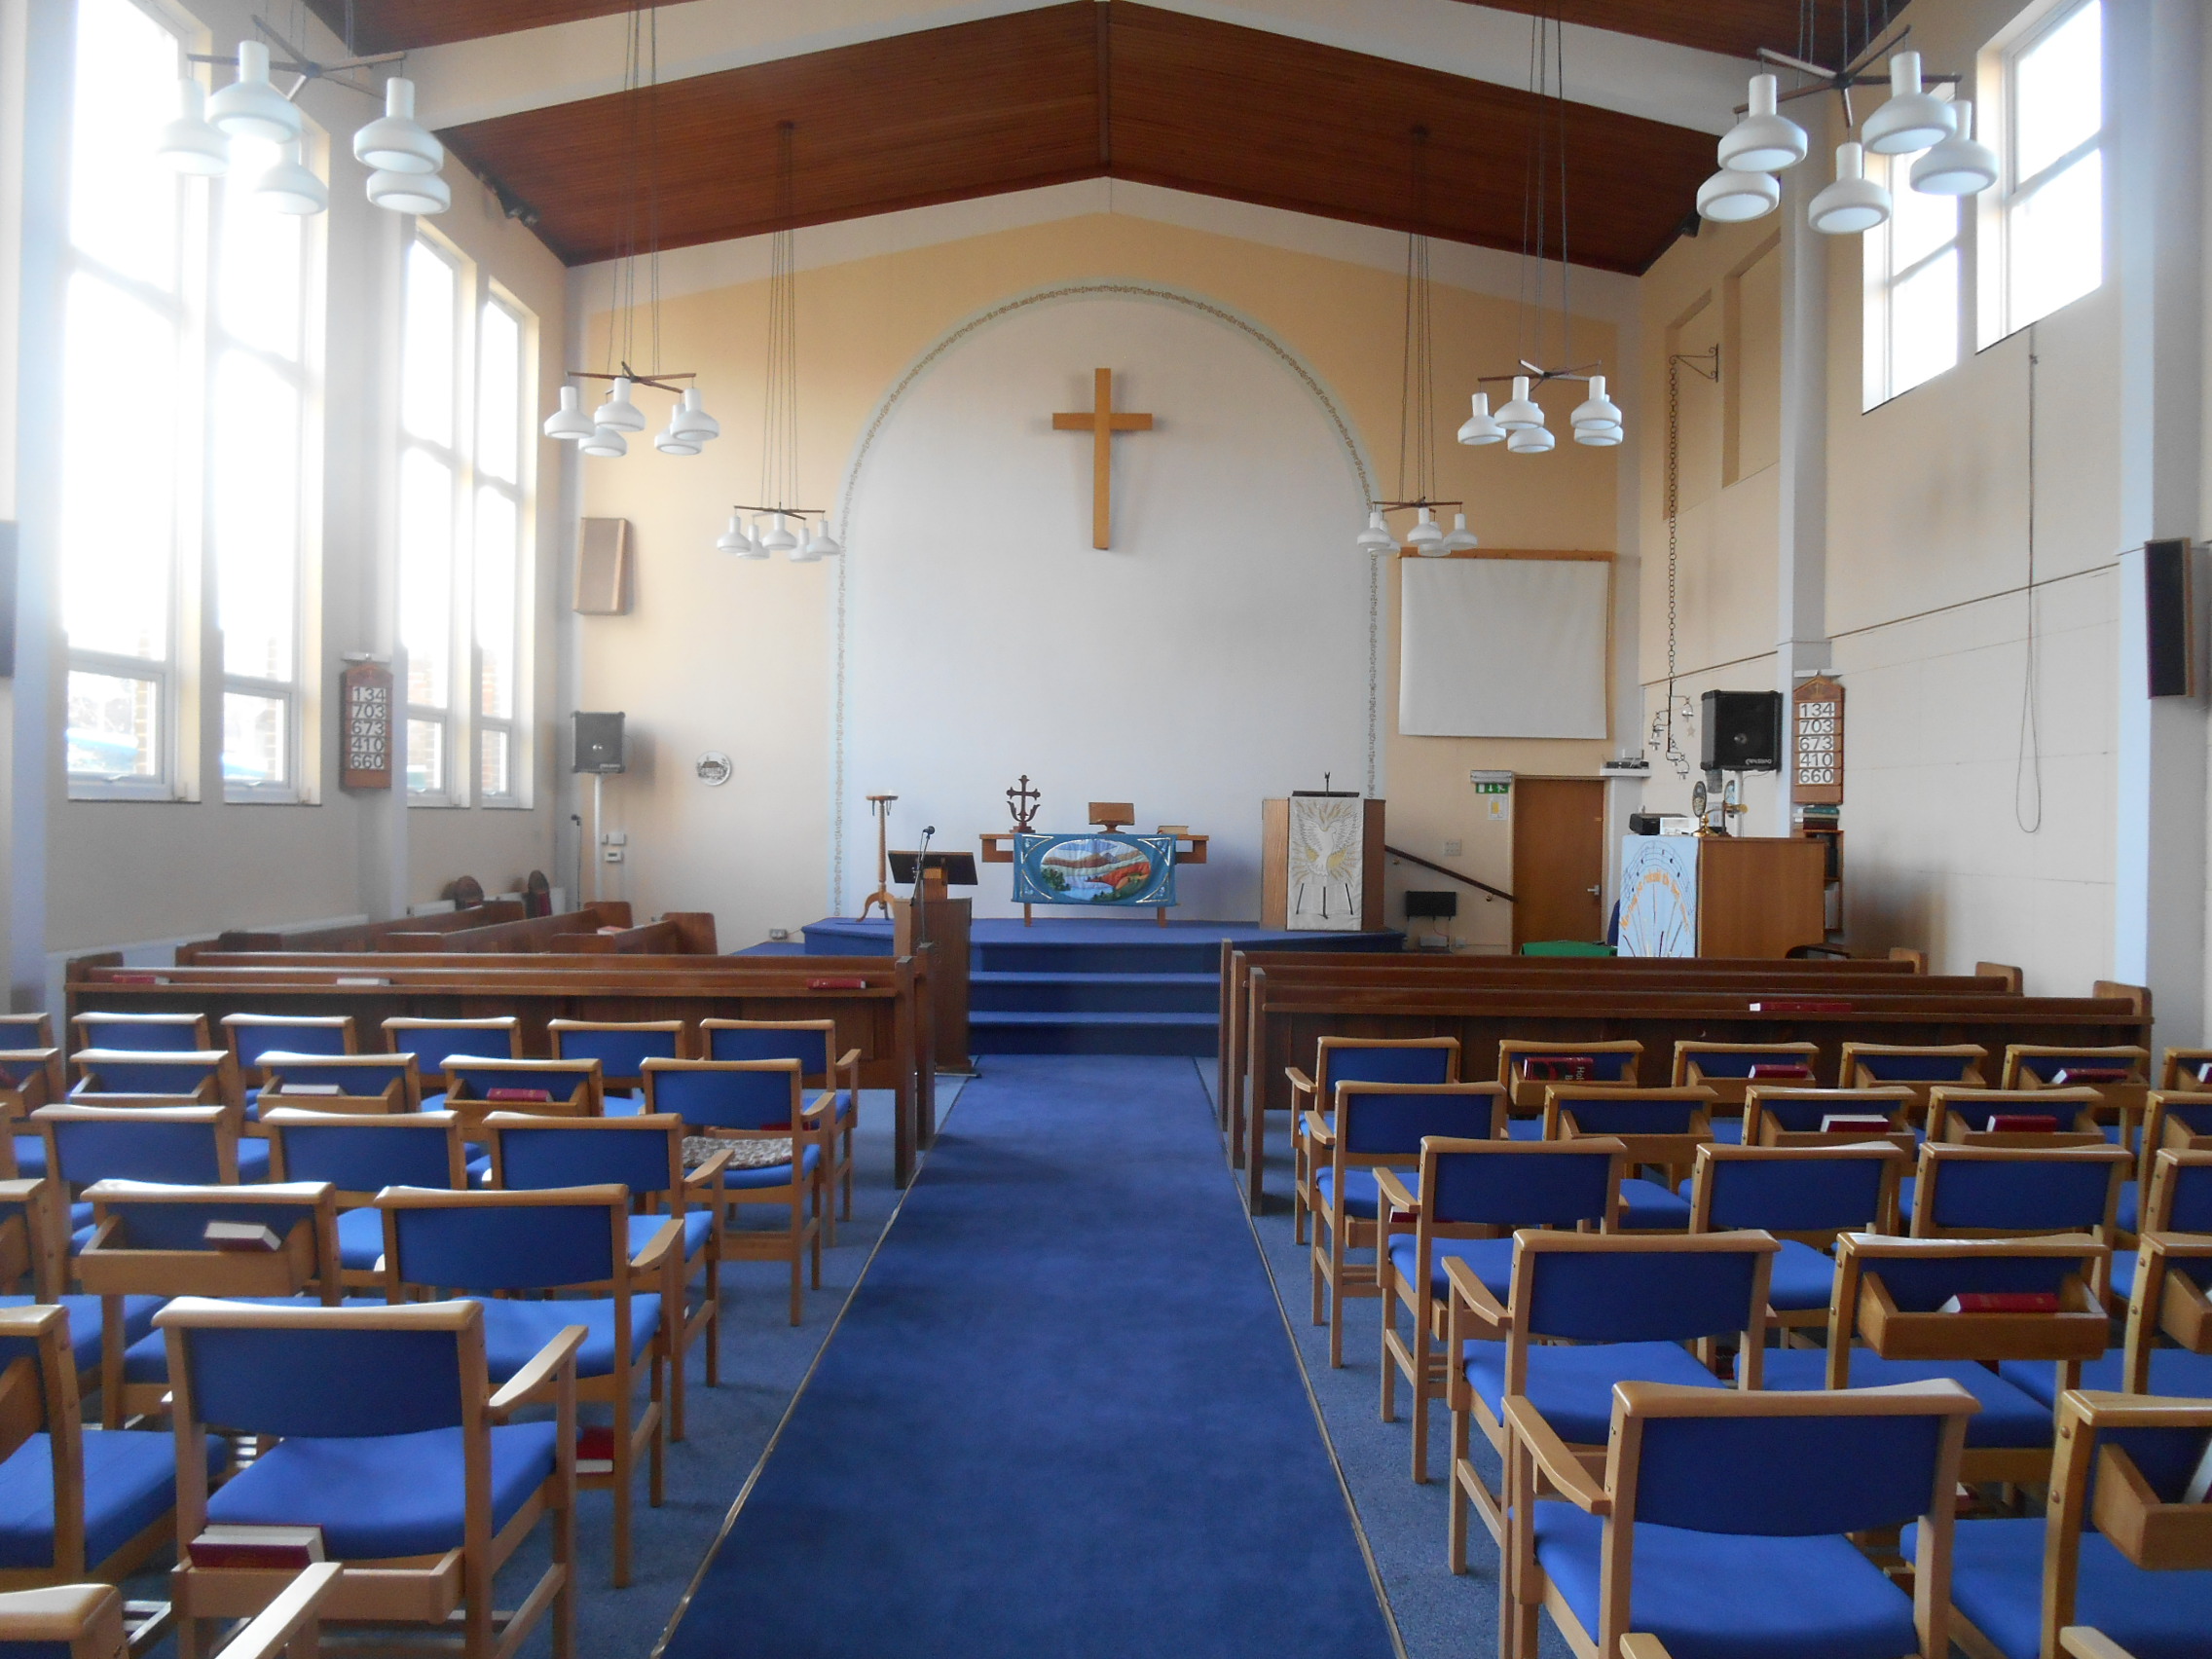 St John's interior